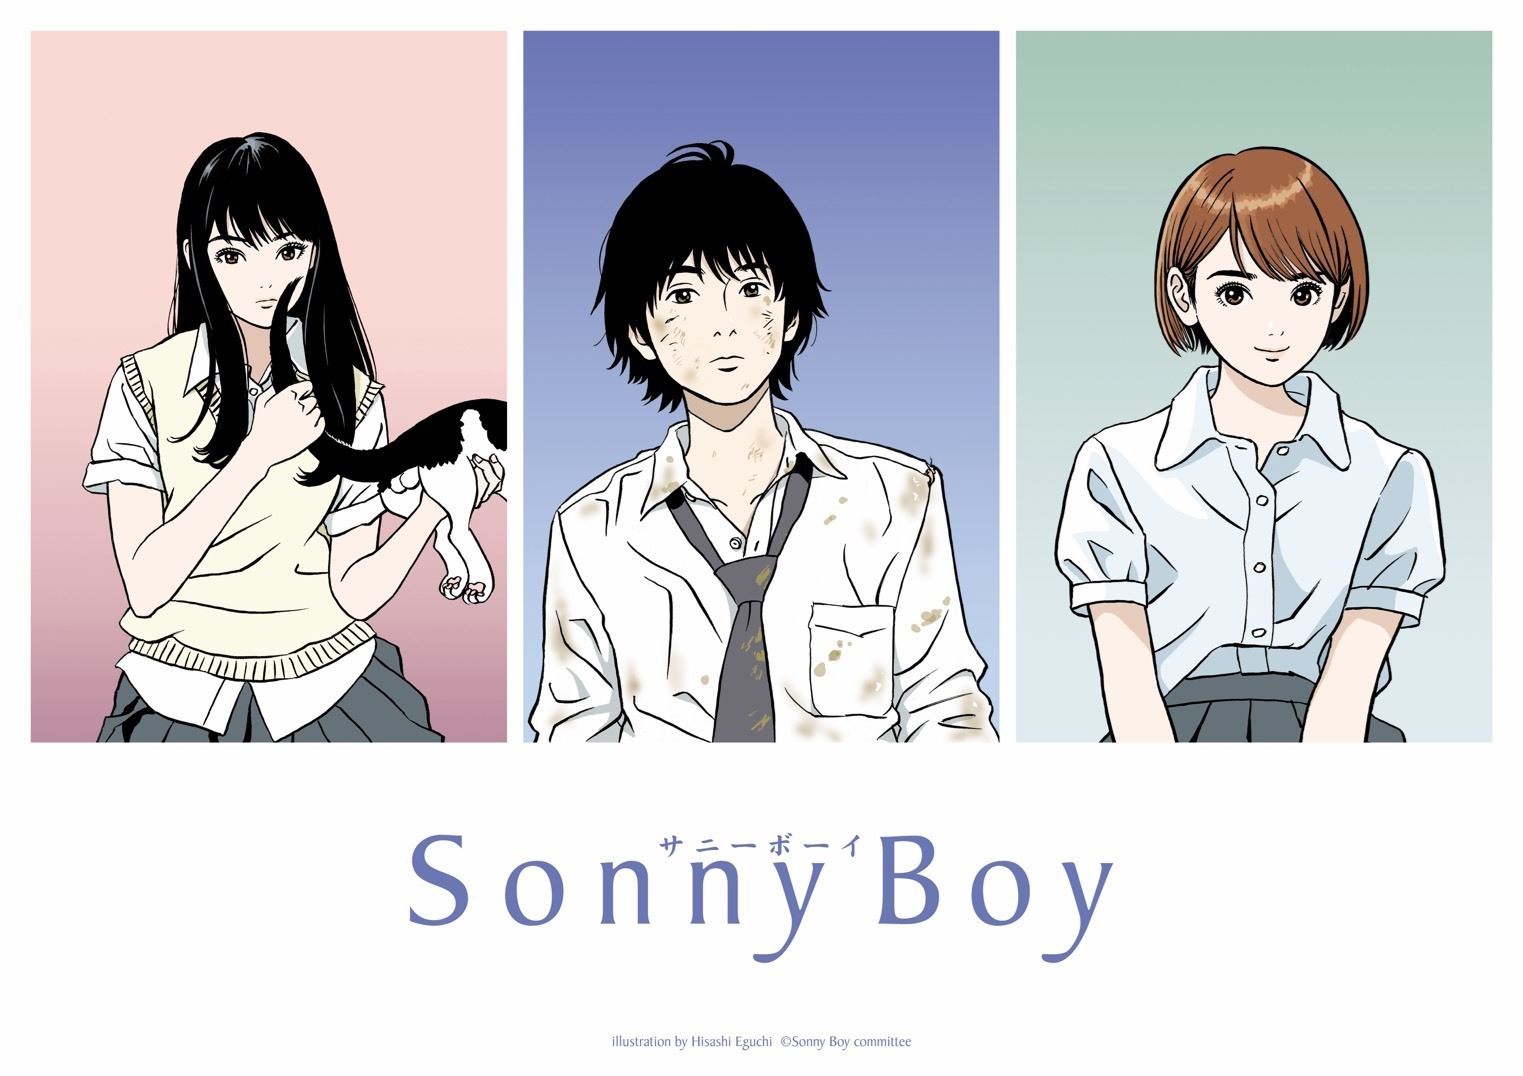 TVアニメ『Sonny Boy』コンセプトビジュアル (C)Sonny Boy committee